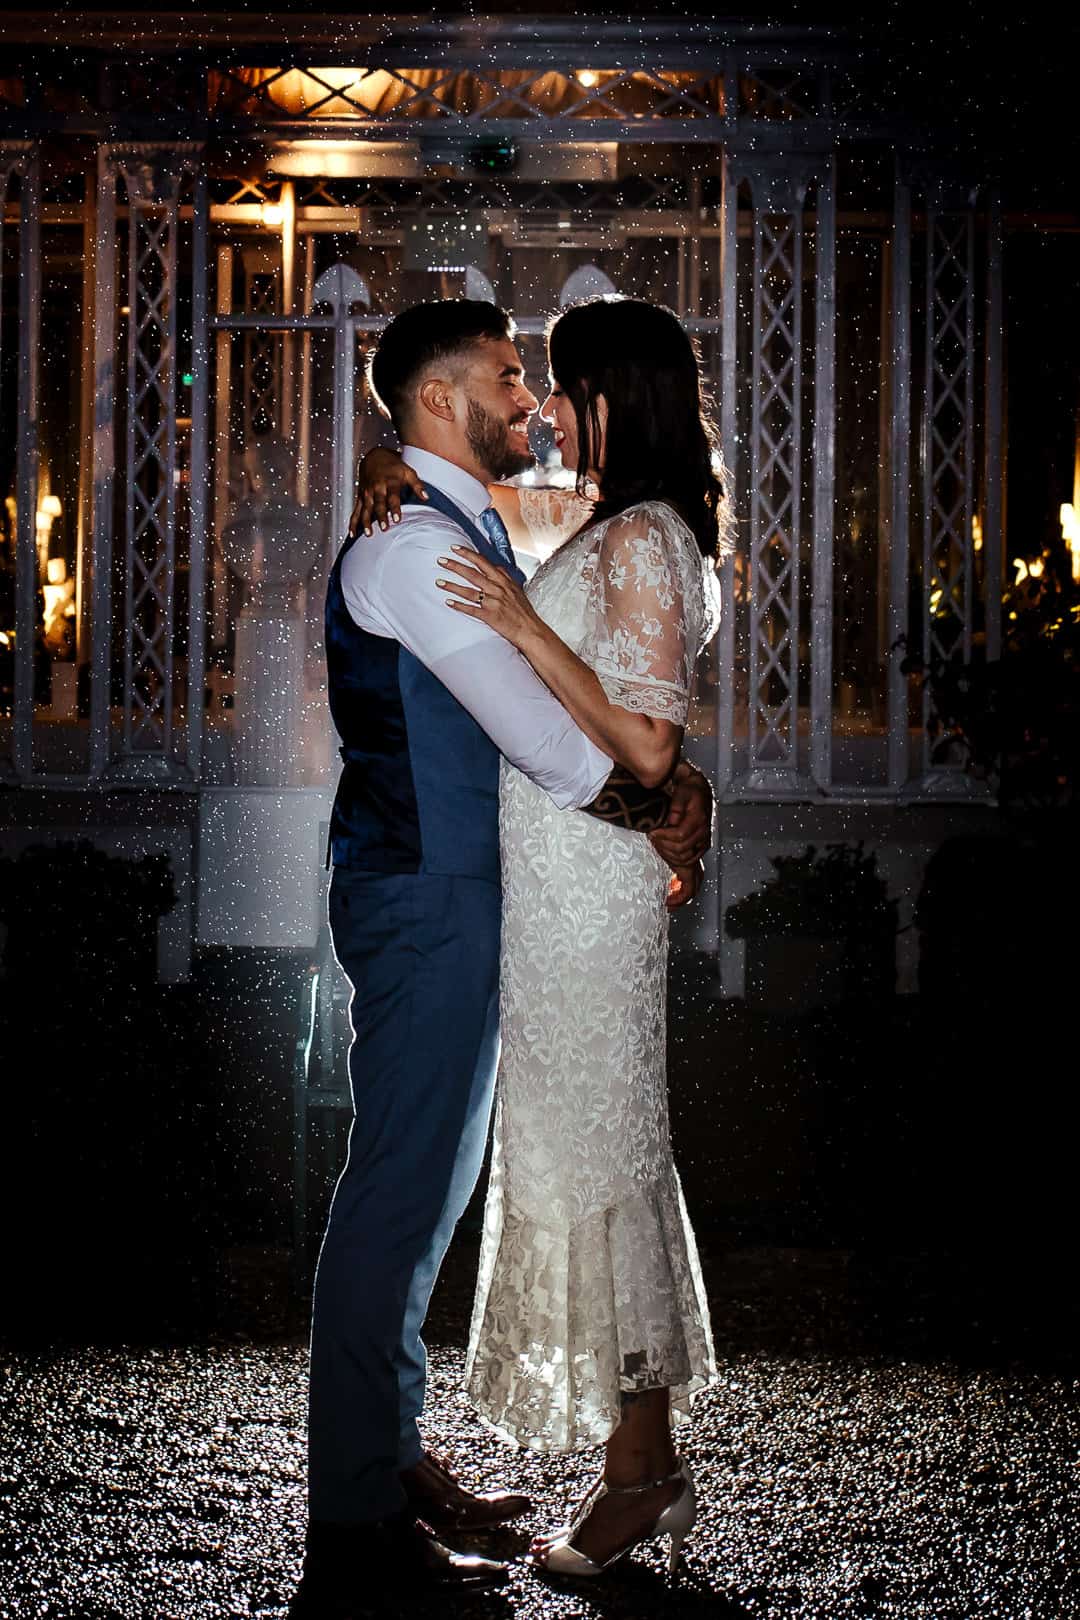 couple kissing in the rain at night creative wedding photography ireland